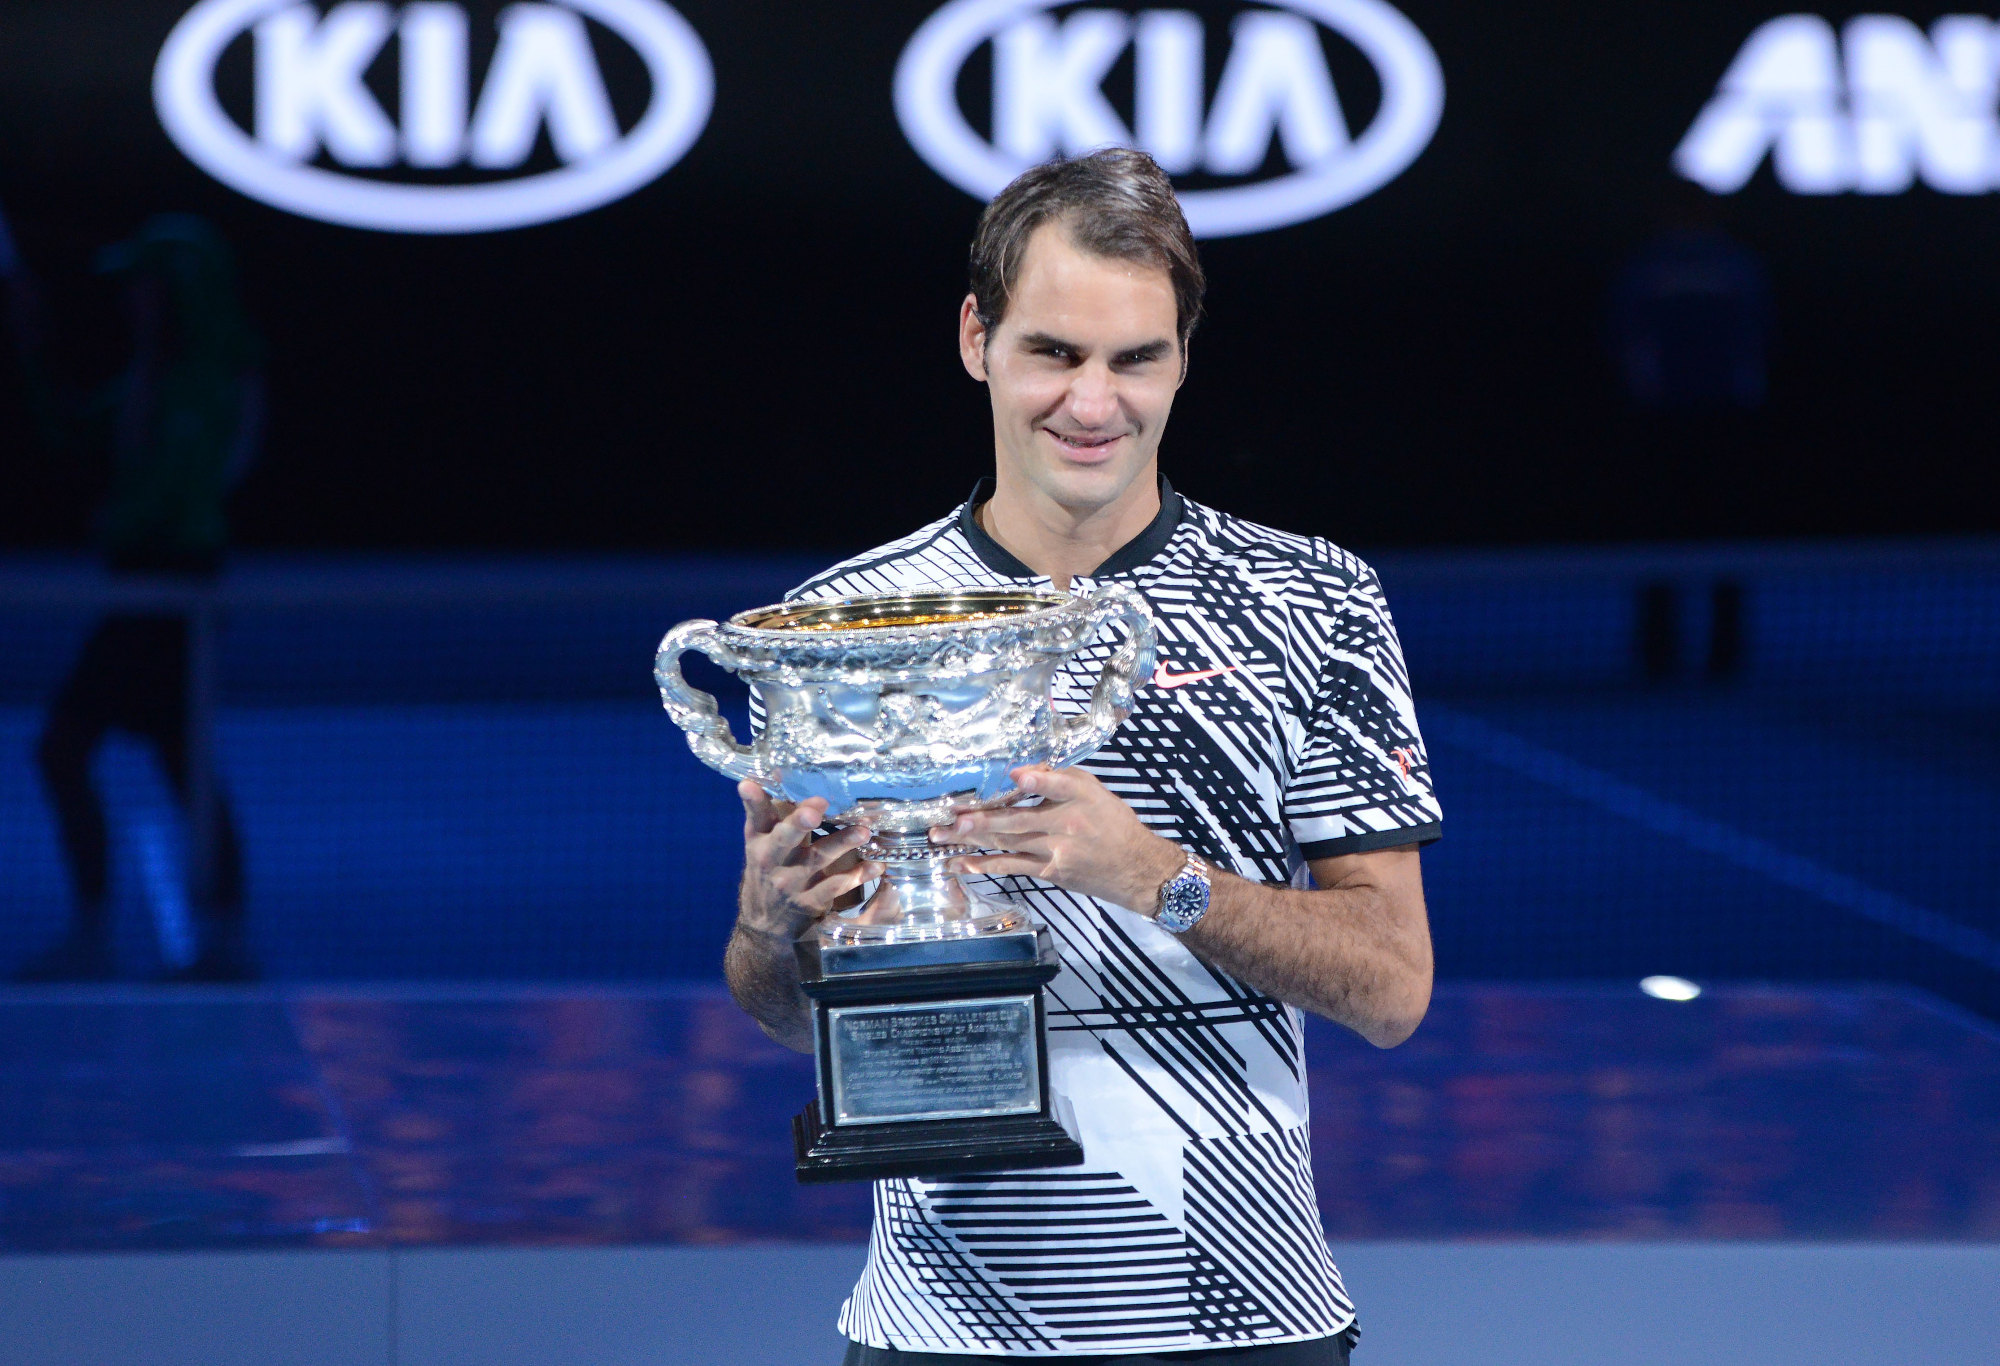 Roger Federer of Switzerland after winning the 2017 Australian Open.